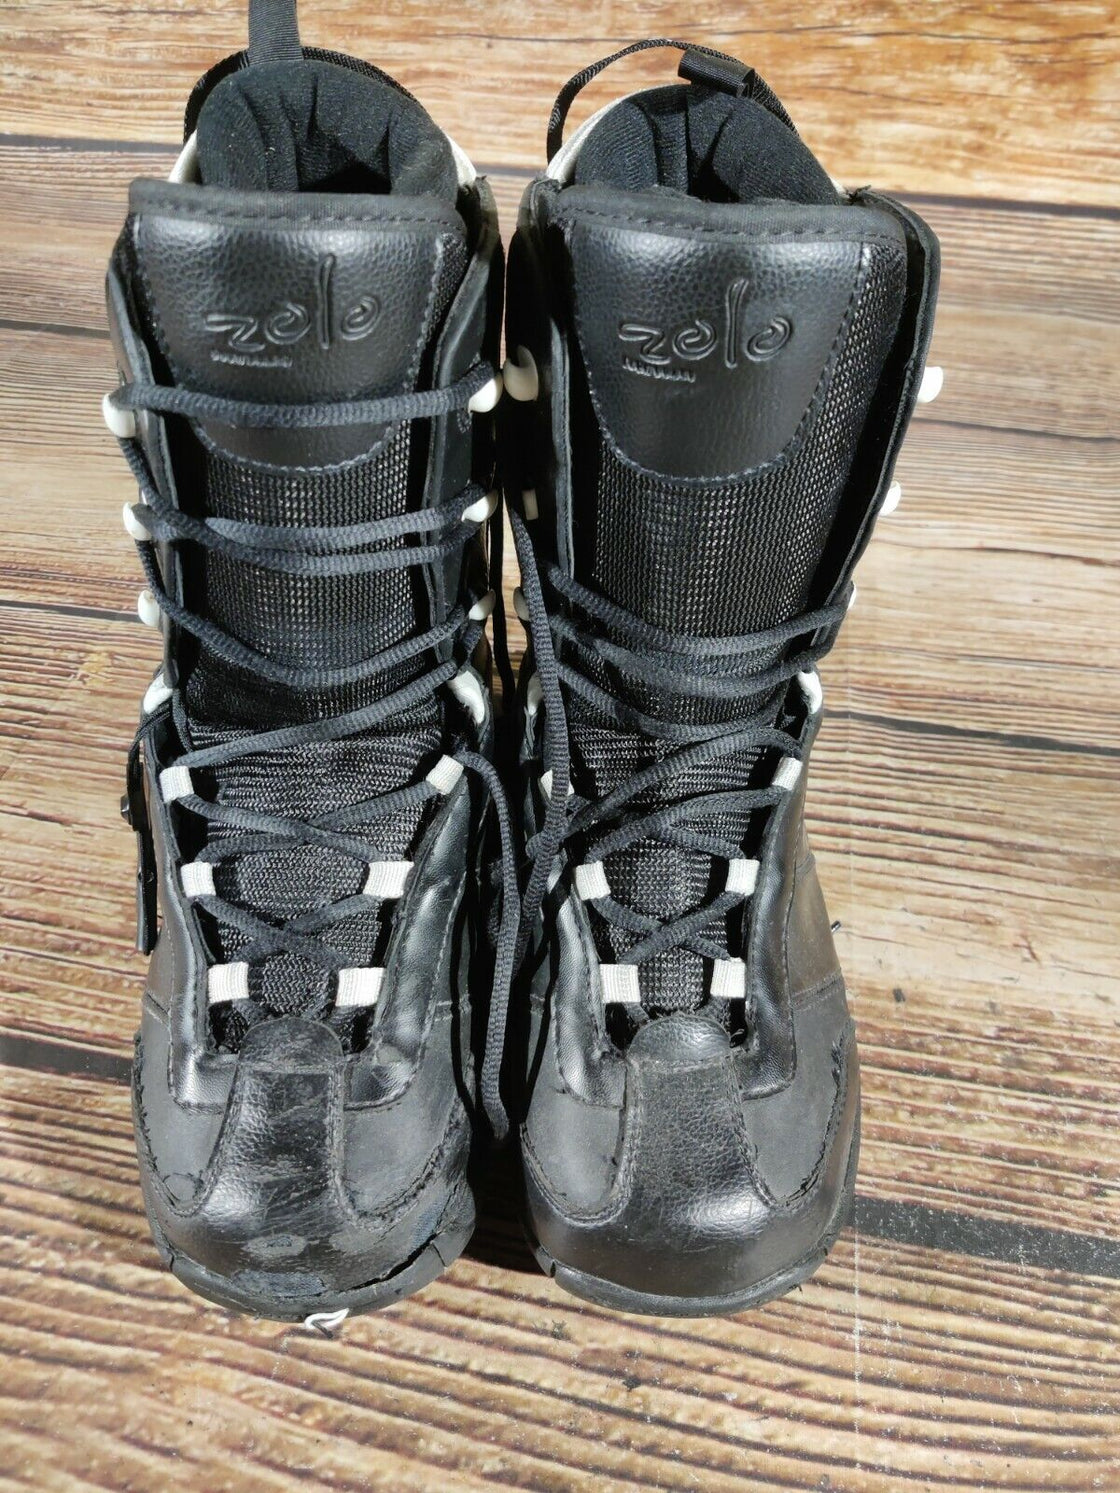 ZOLO Snowboard Boots Size EU42, US9, UK8, Mondo 266 mm C